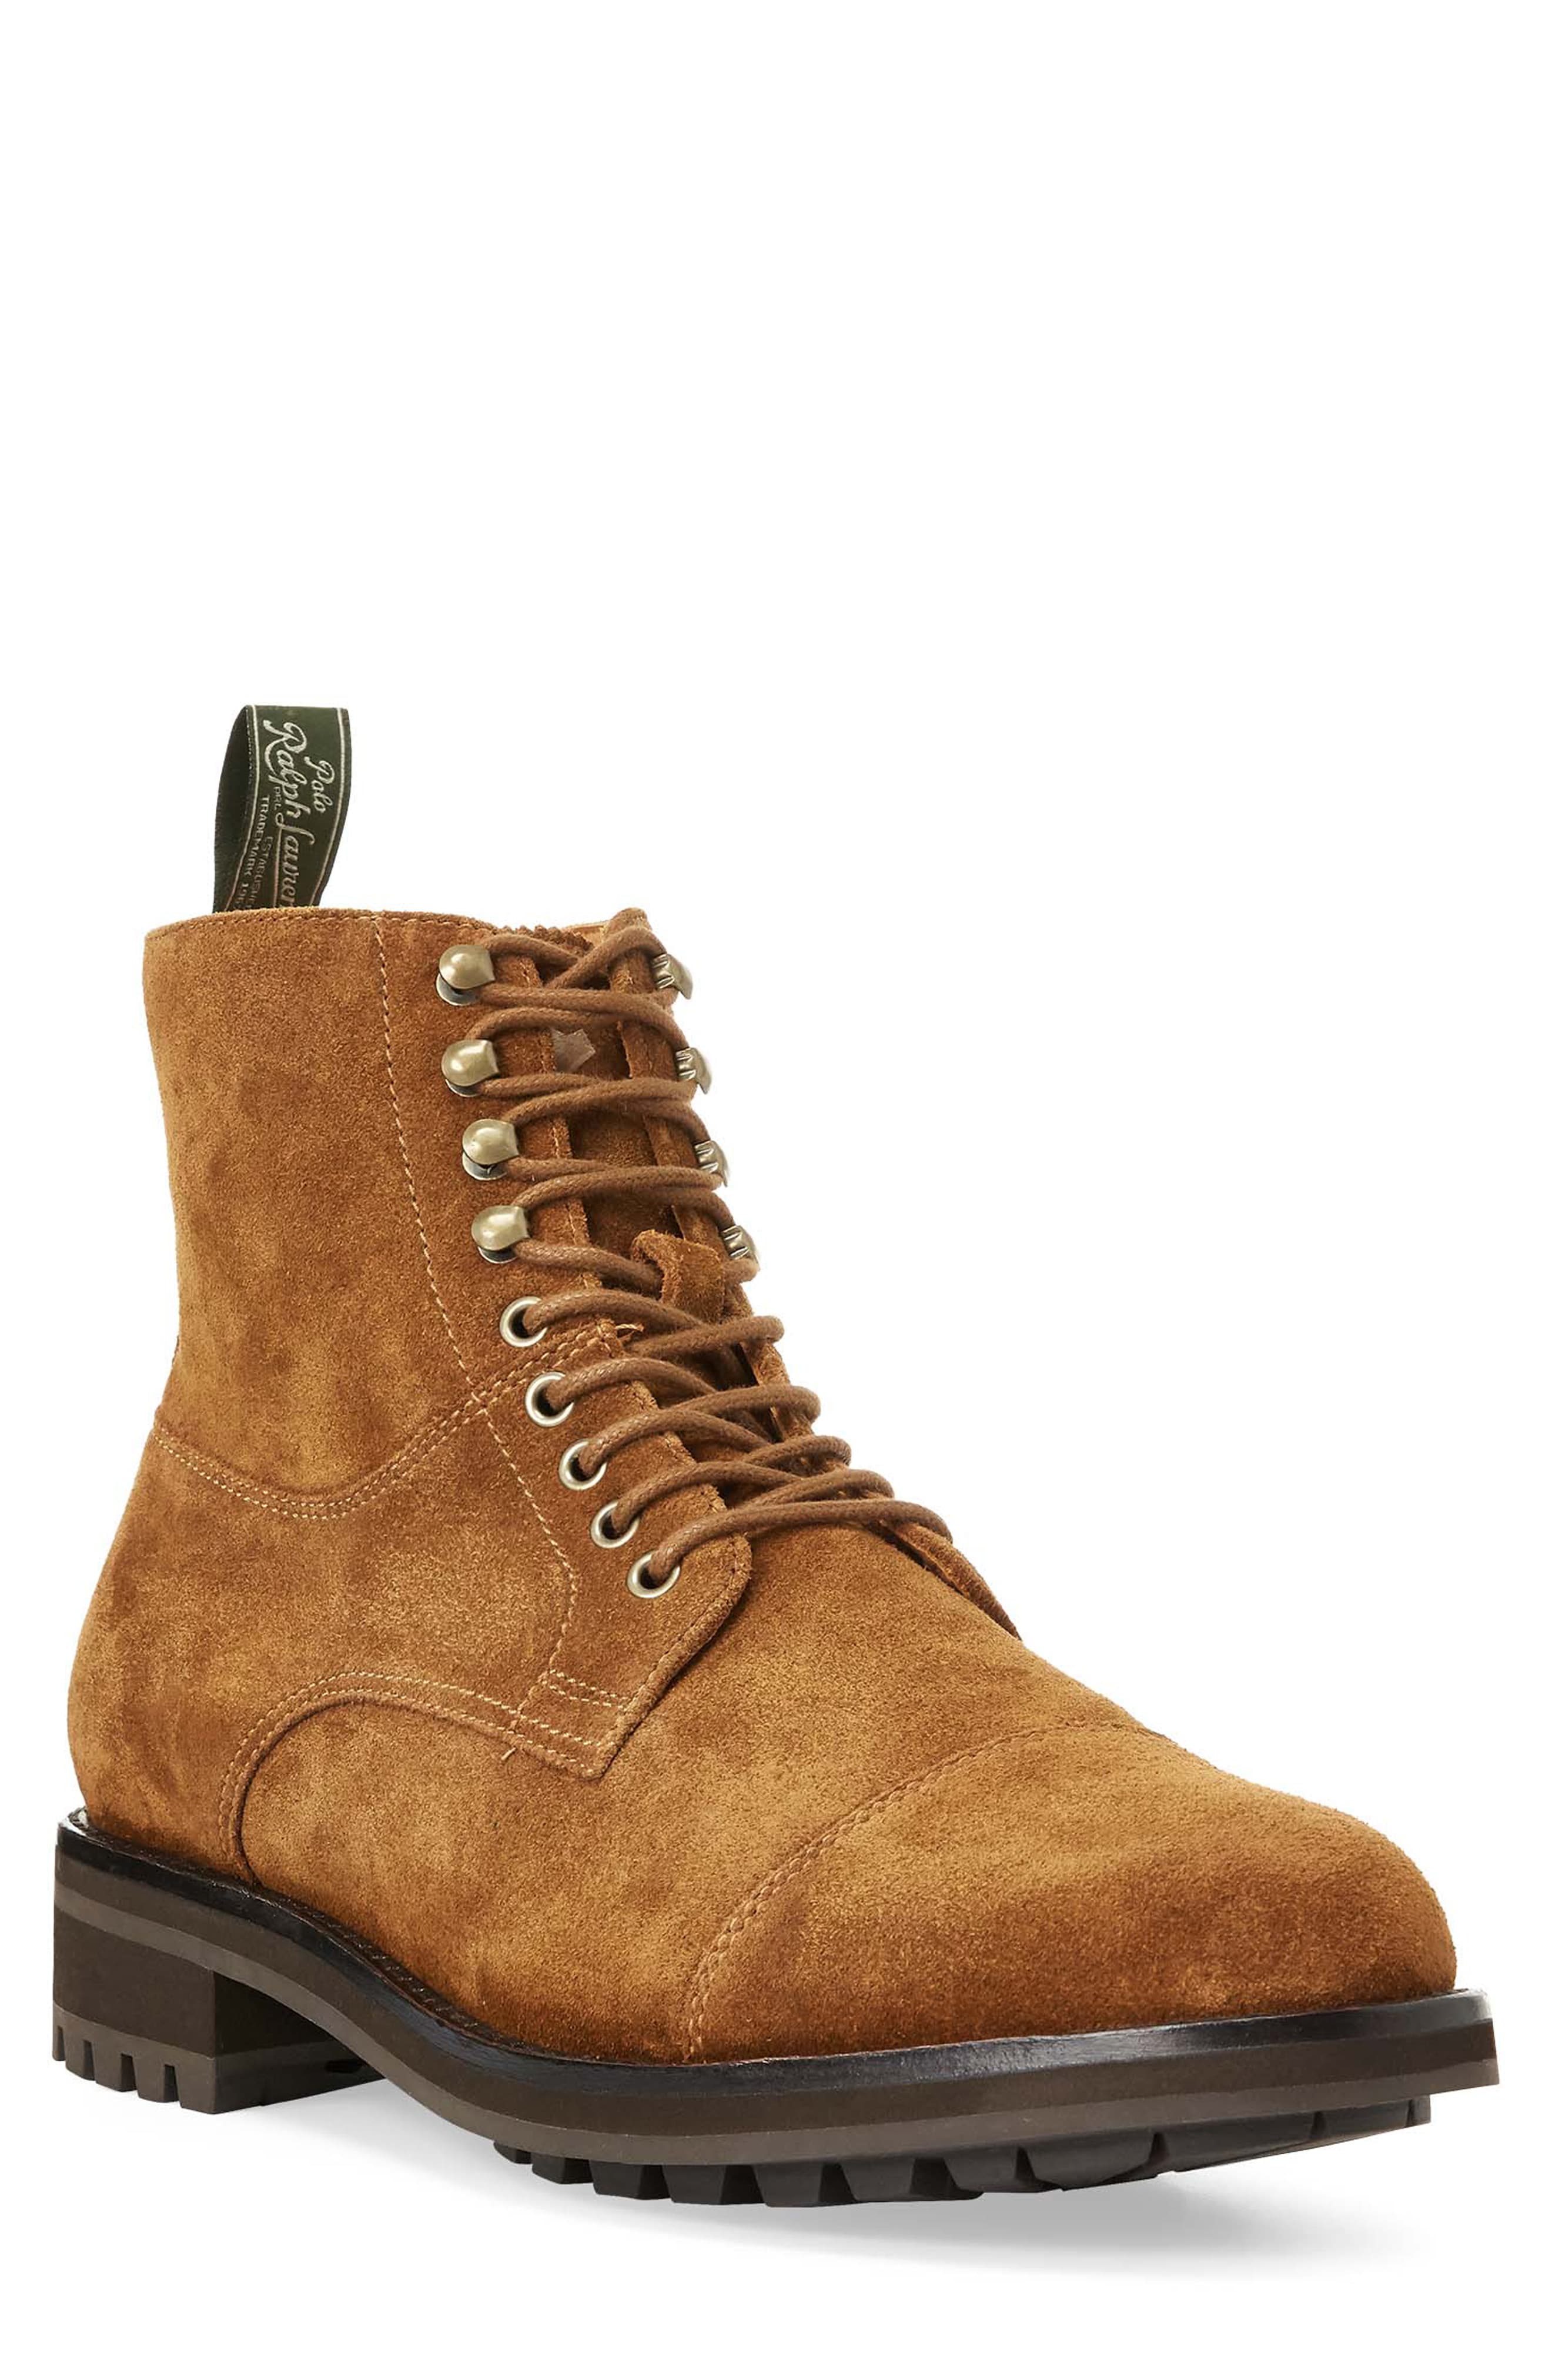 Polo Ralph Lauren Mens Bryson Boots, Brown, Various Sizes | eBay